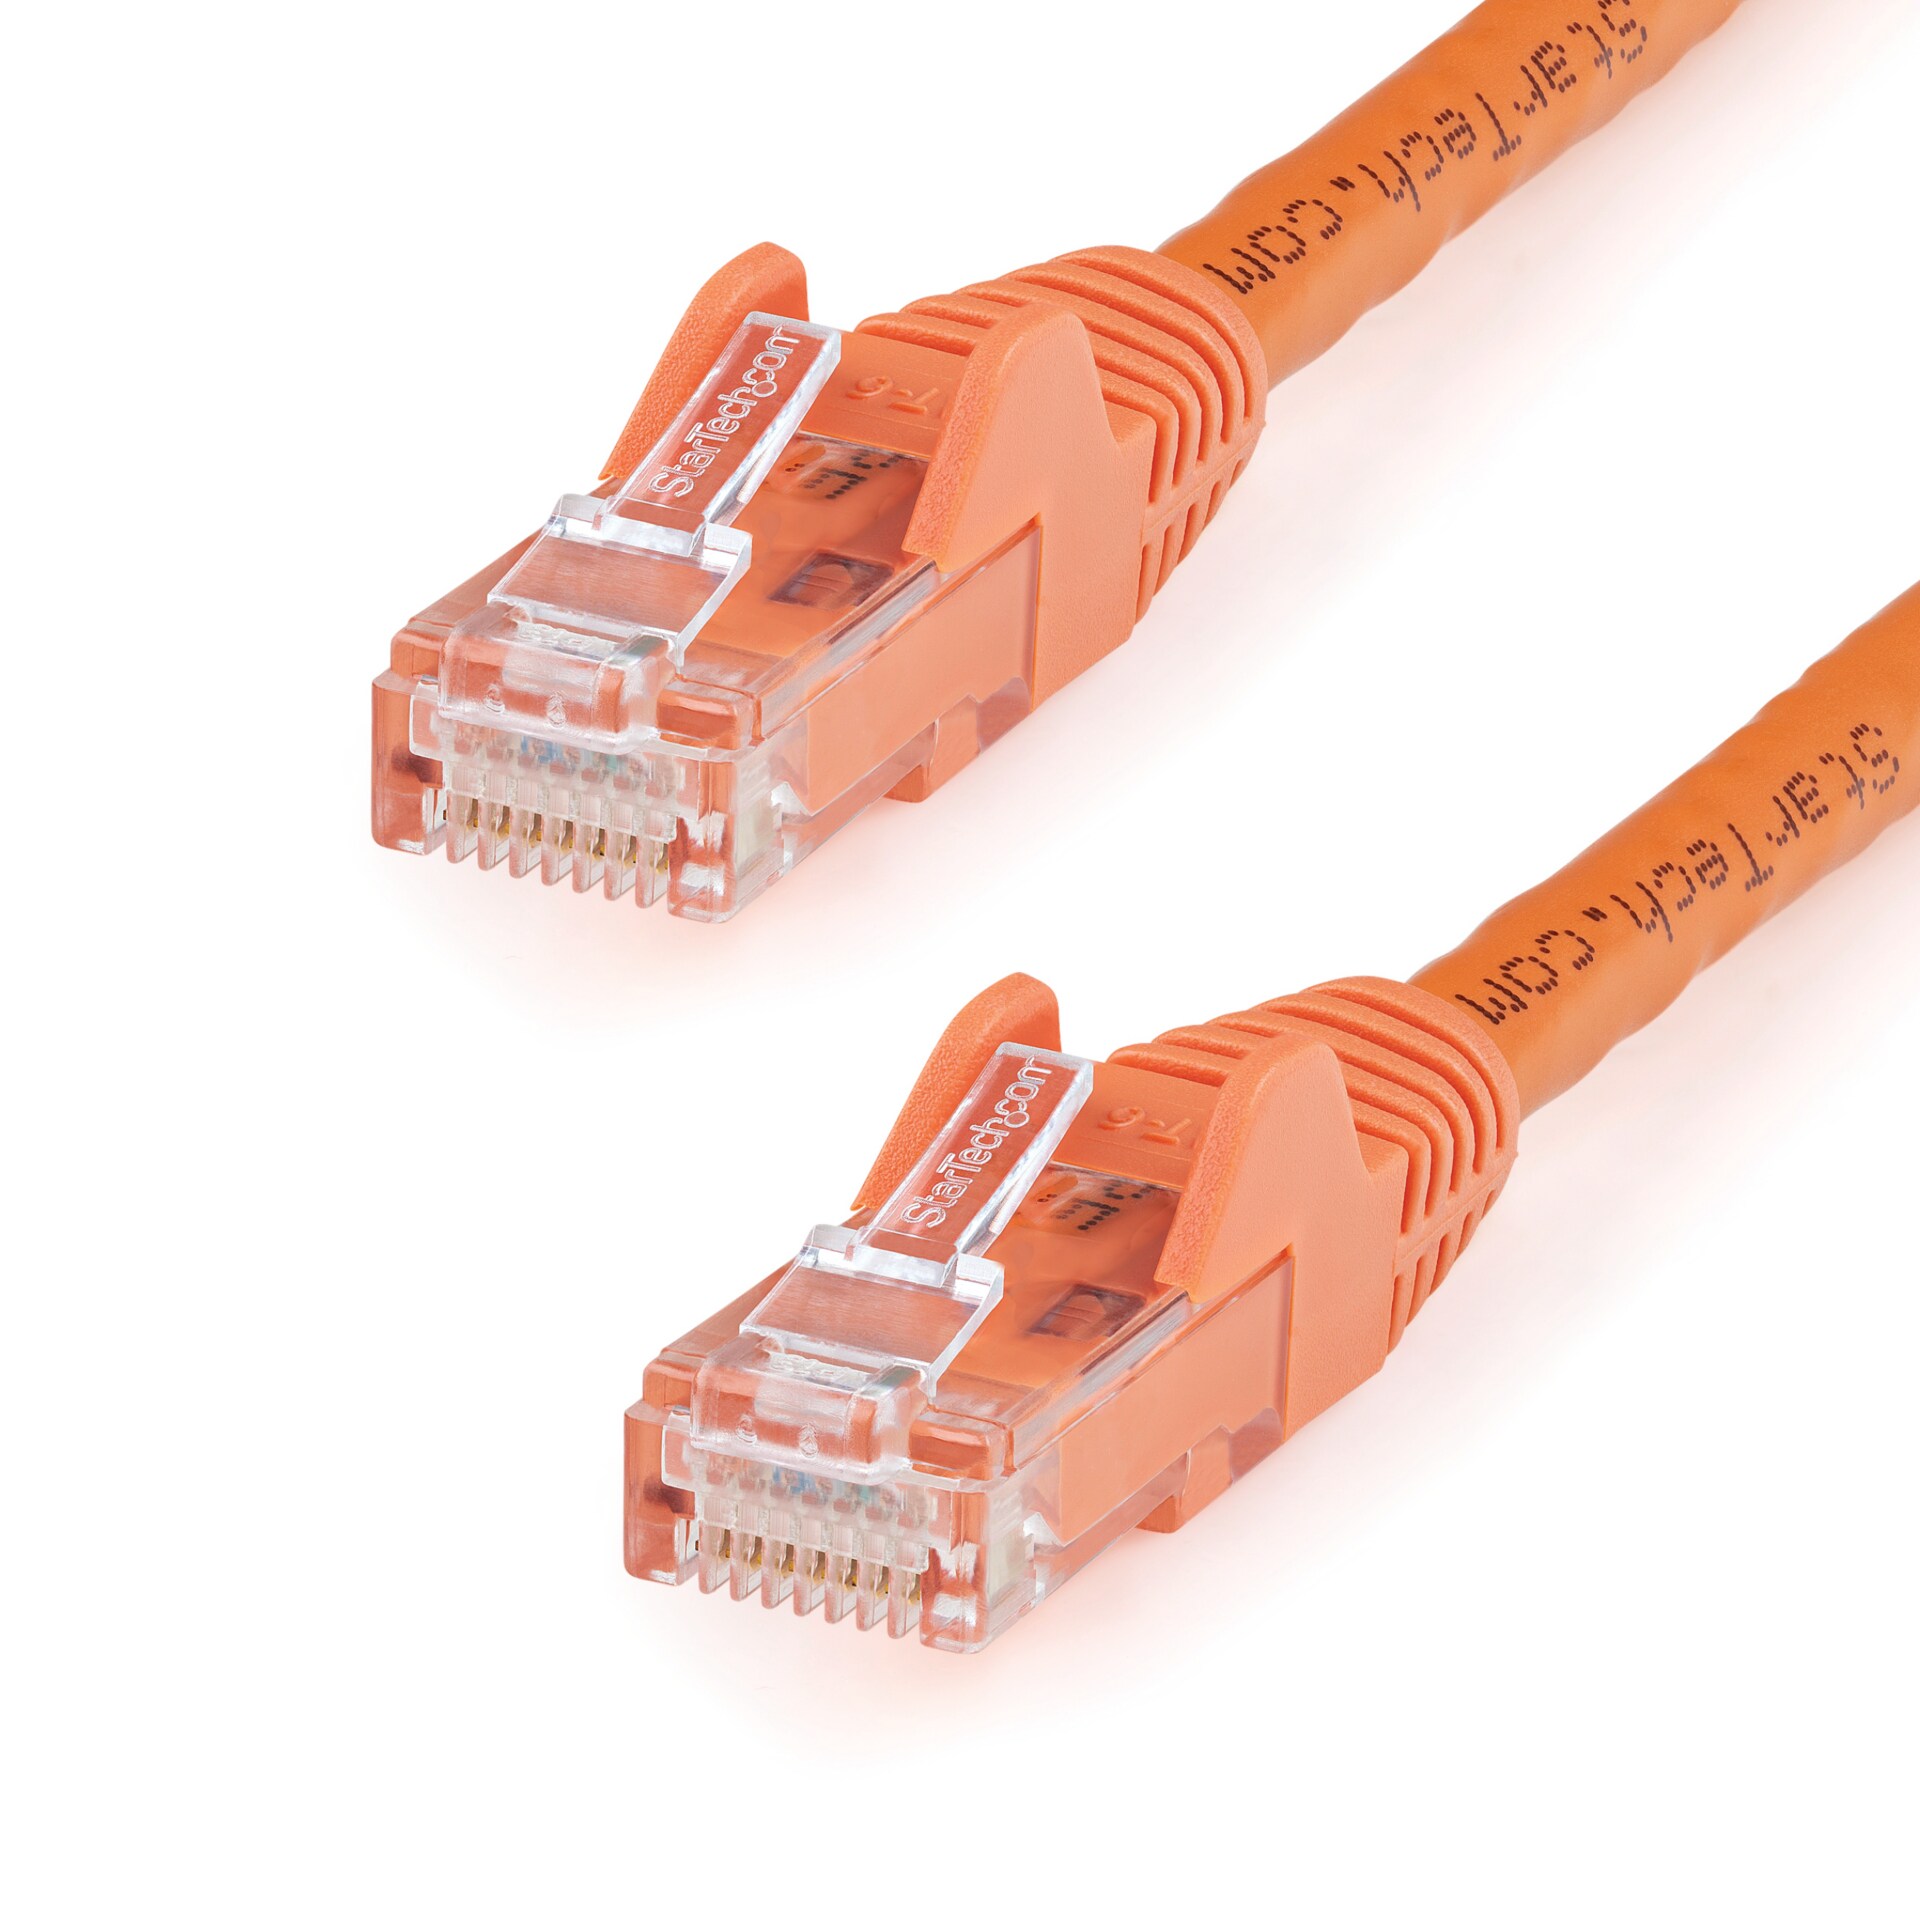 StarTech.com CAT6 Ethernet Cable 30' Orange 650MHz PoE Snagless Patch Cord